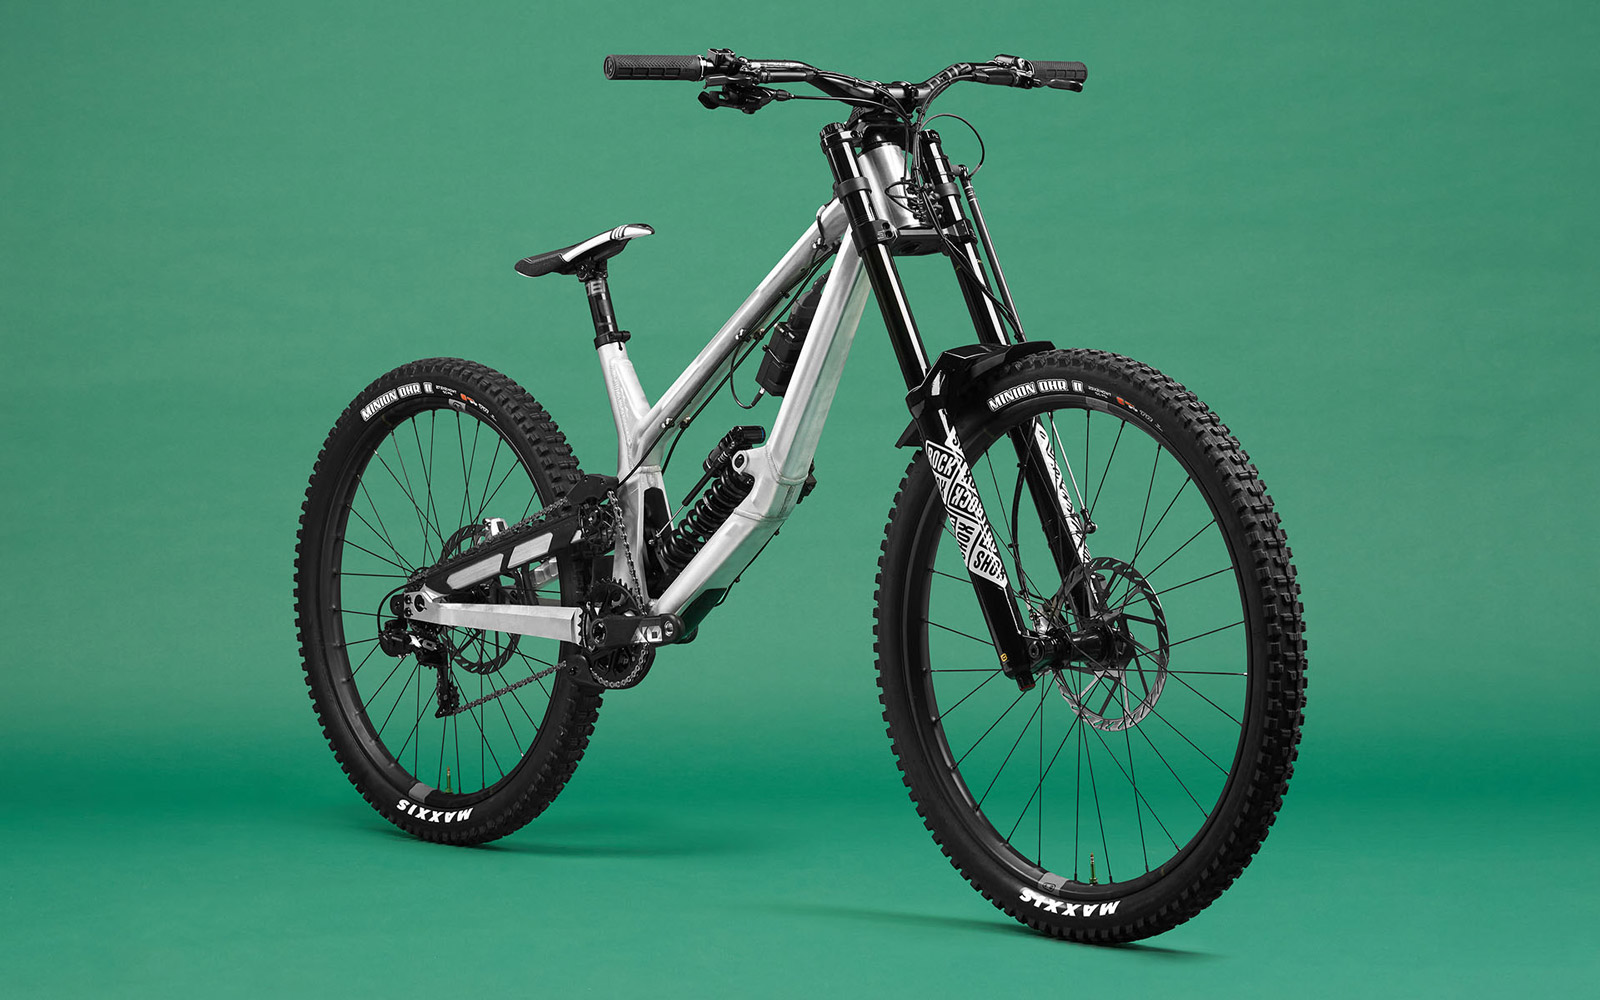 prototype norco downhill bike aluminum frame with telemetry